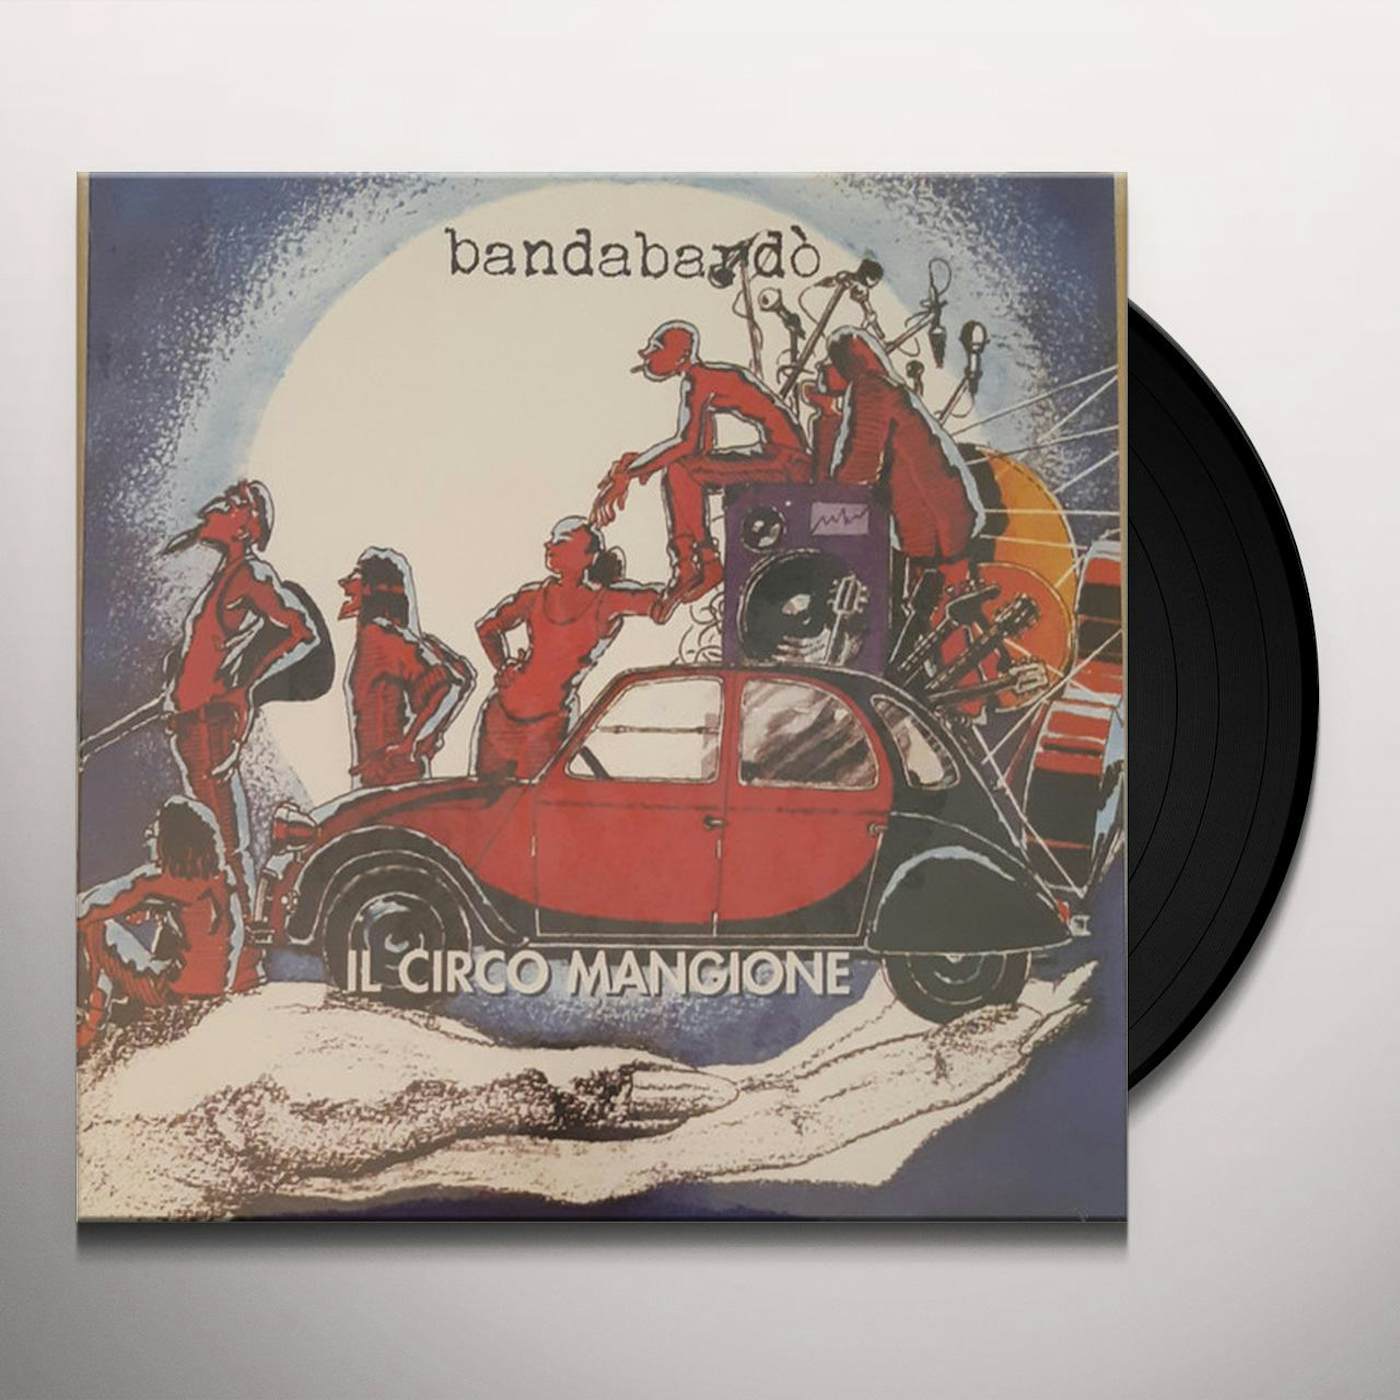 Bandabardò Il Circo Mangione Vinyl Record